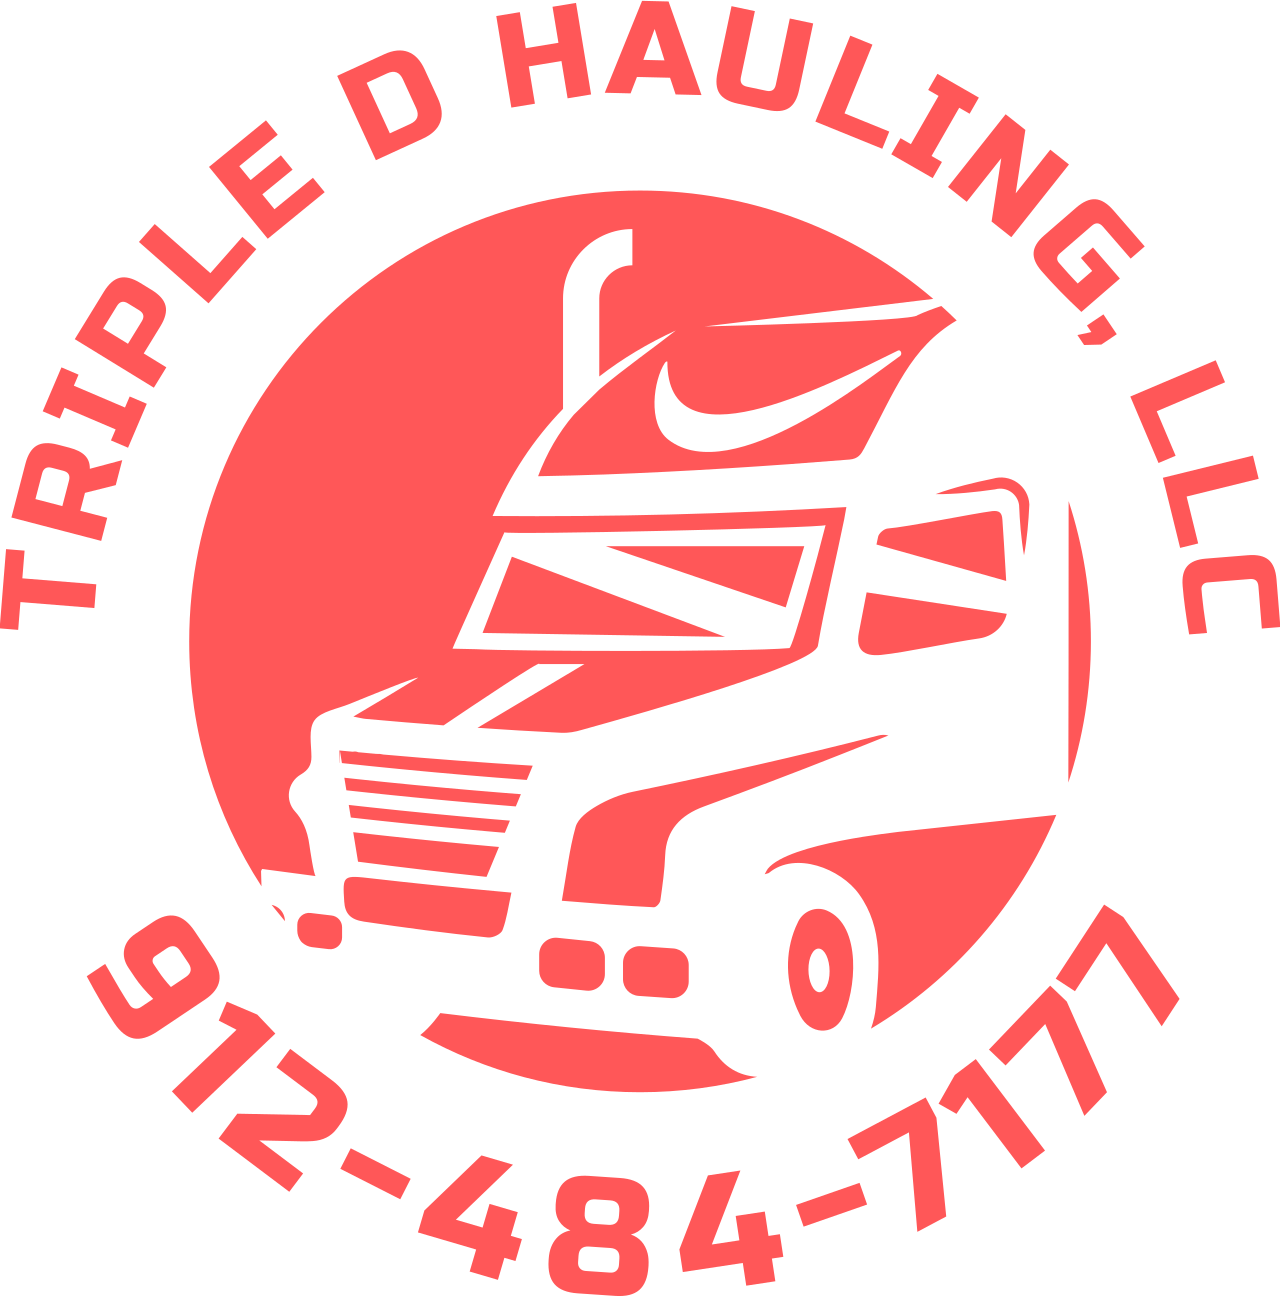 TRIPLE D HAULING, LLC's web page